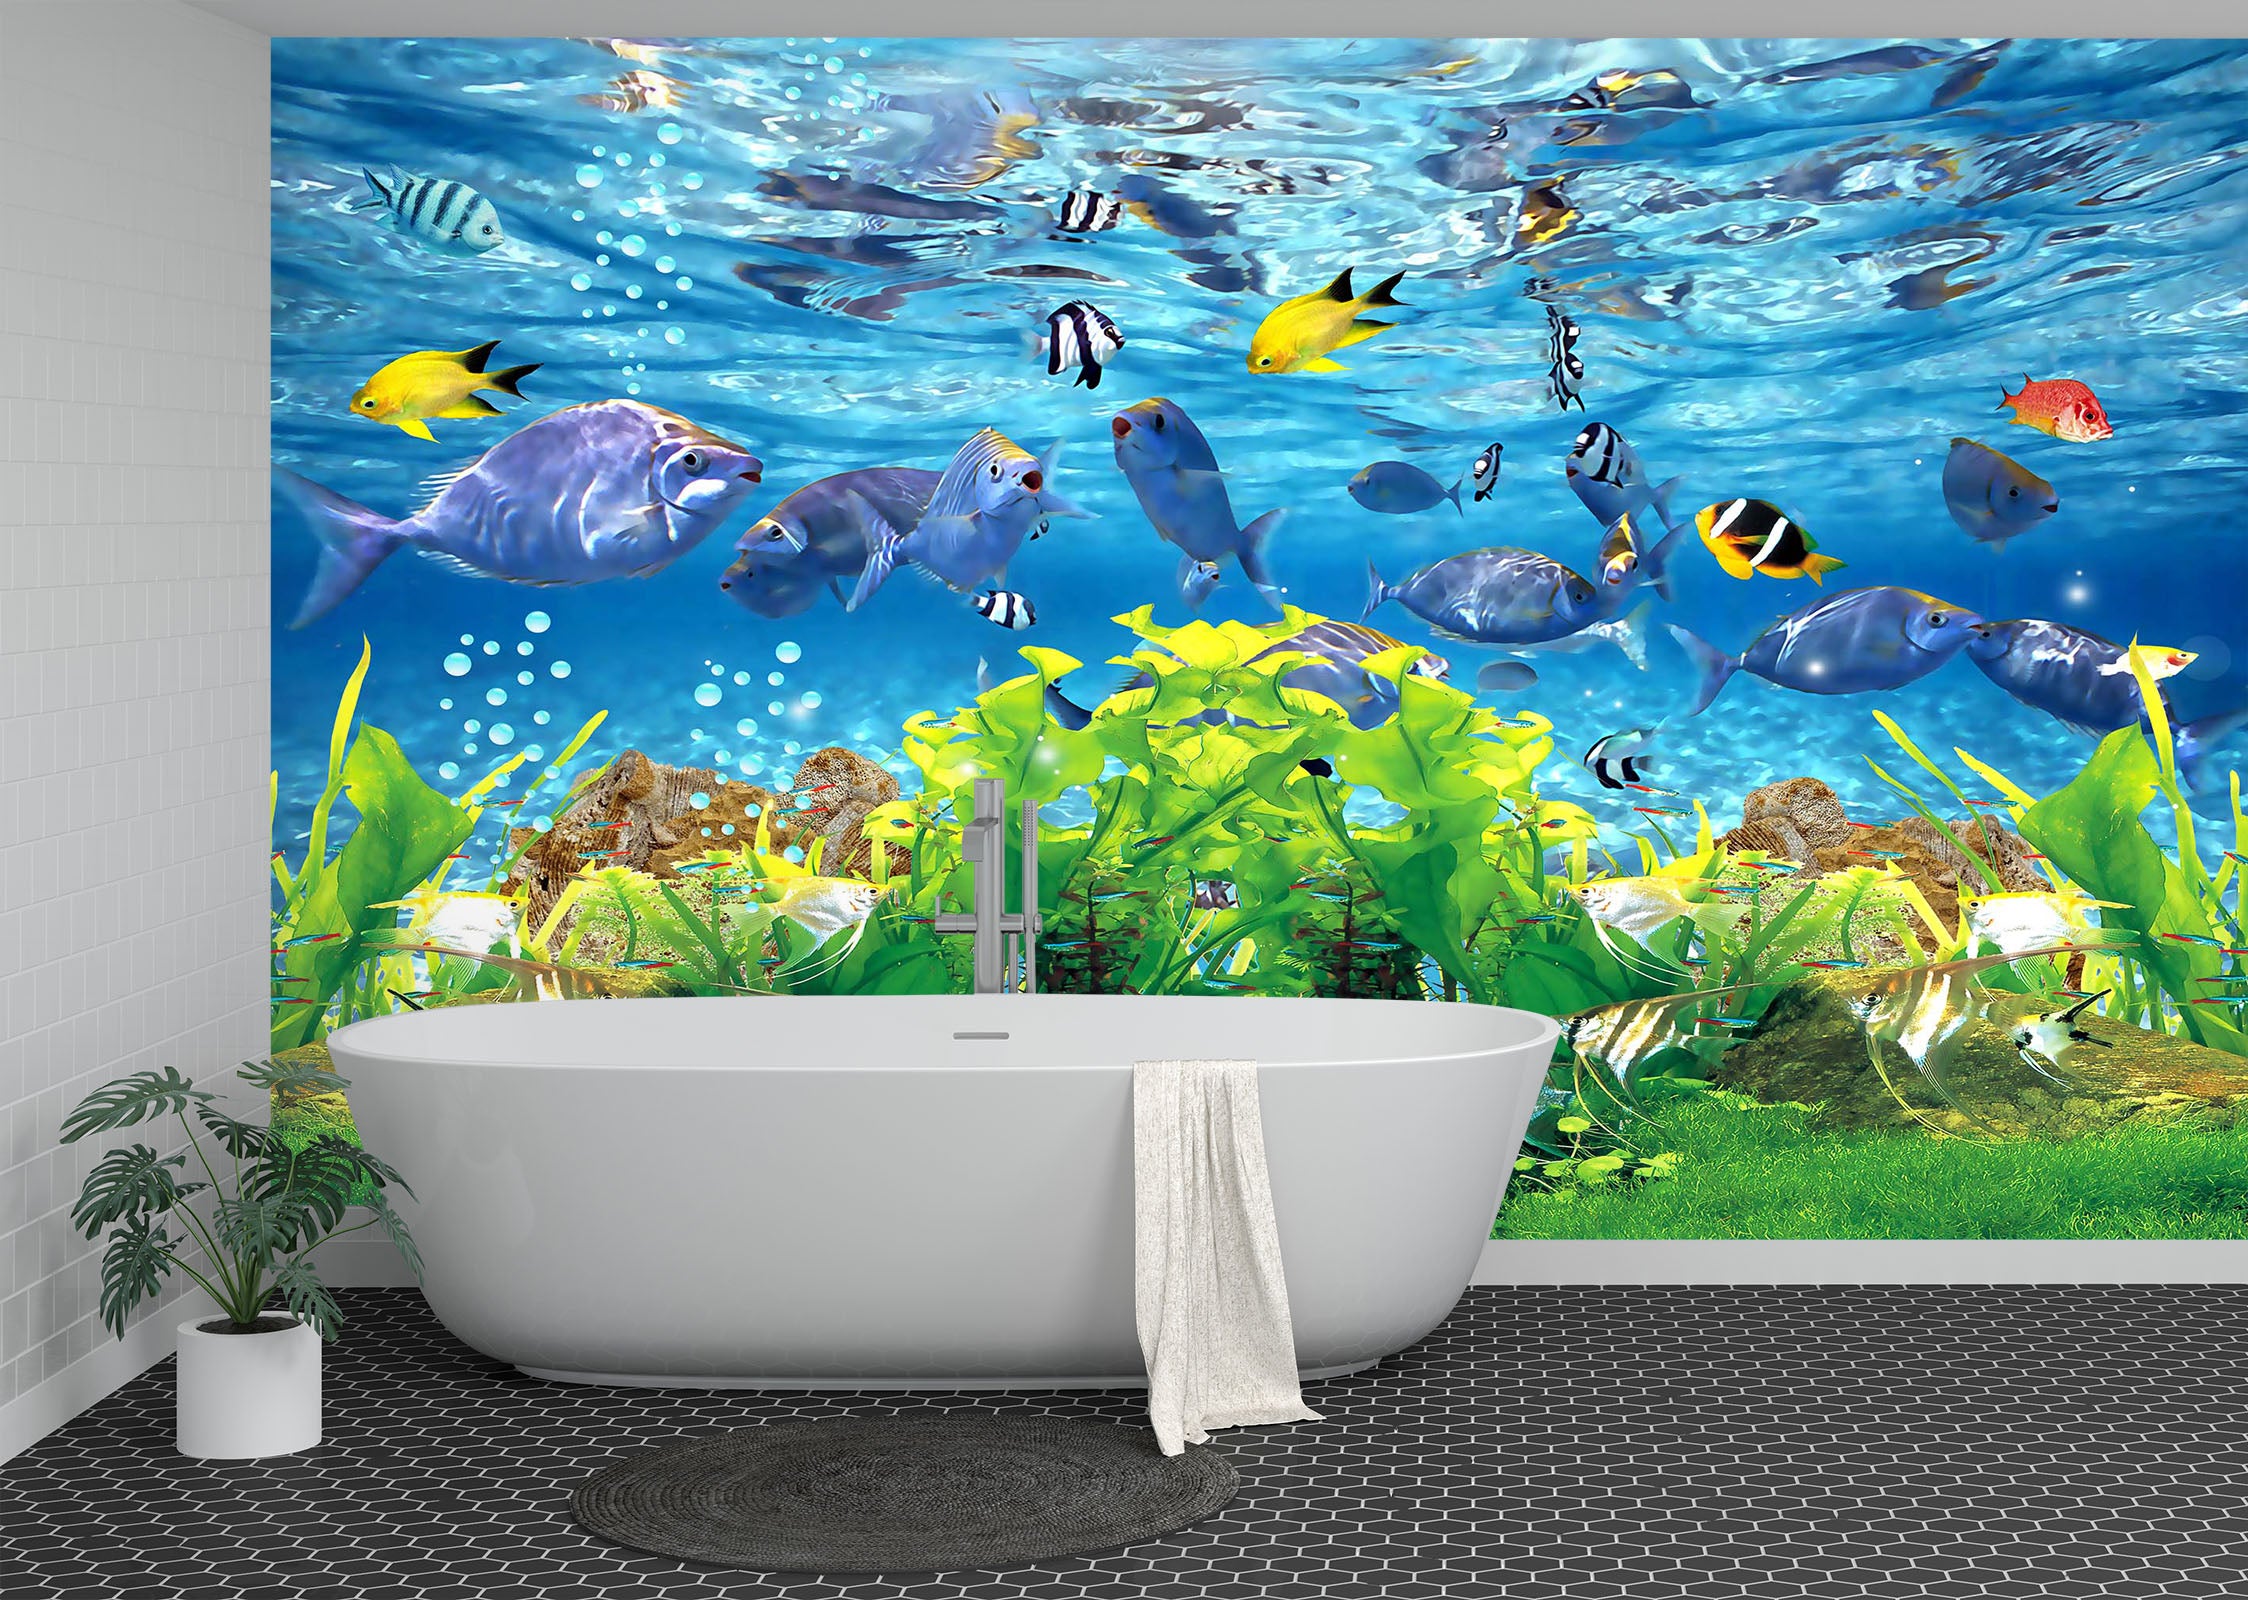 3D Underwater Park 1628 Wall Murals